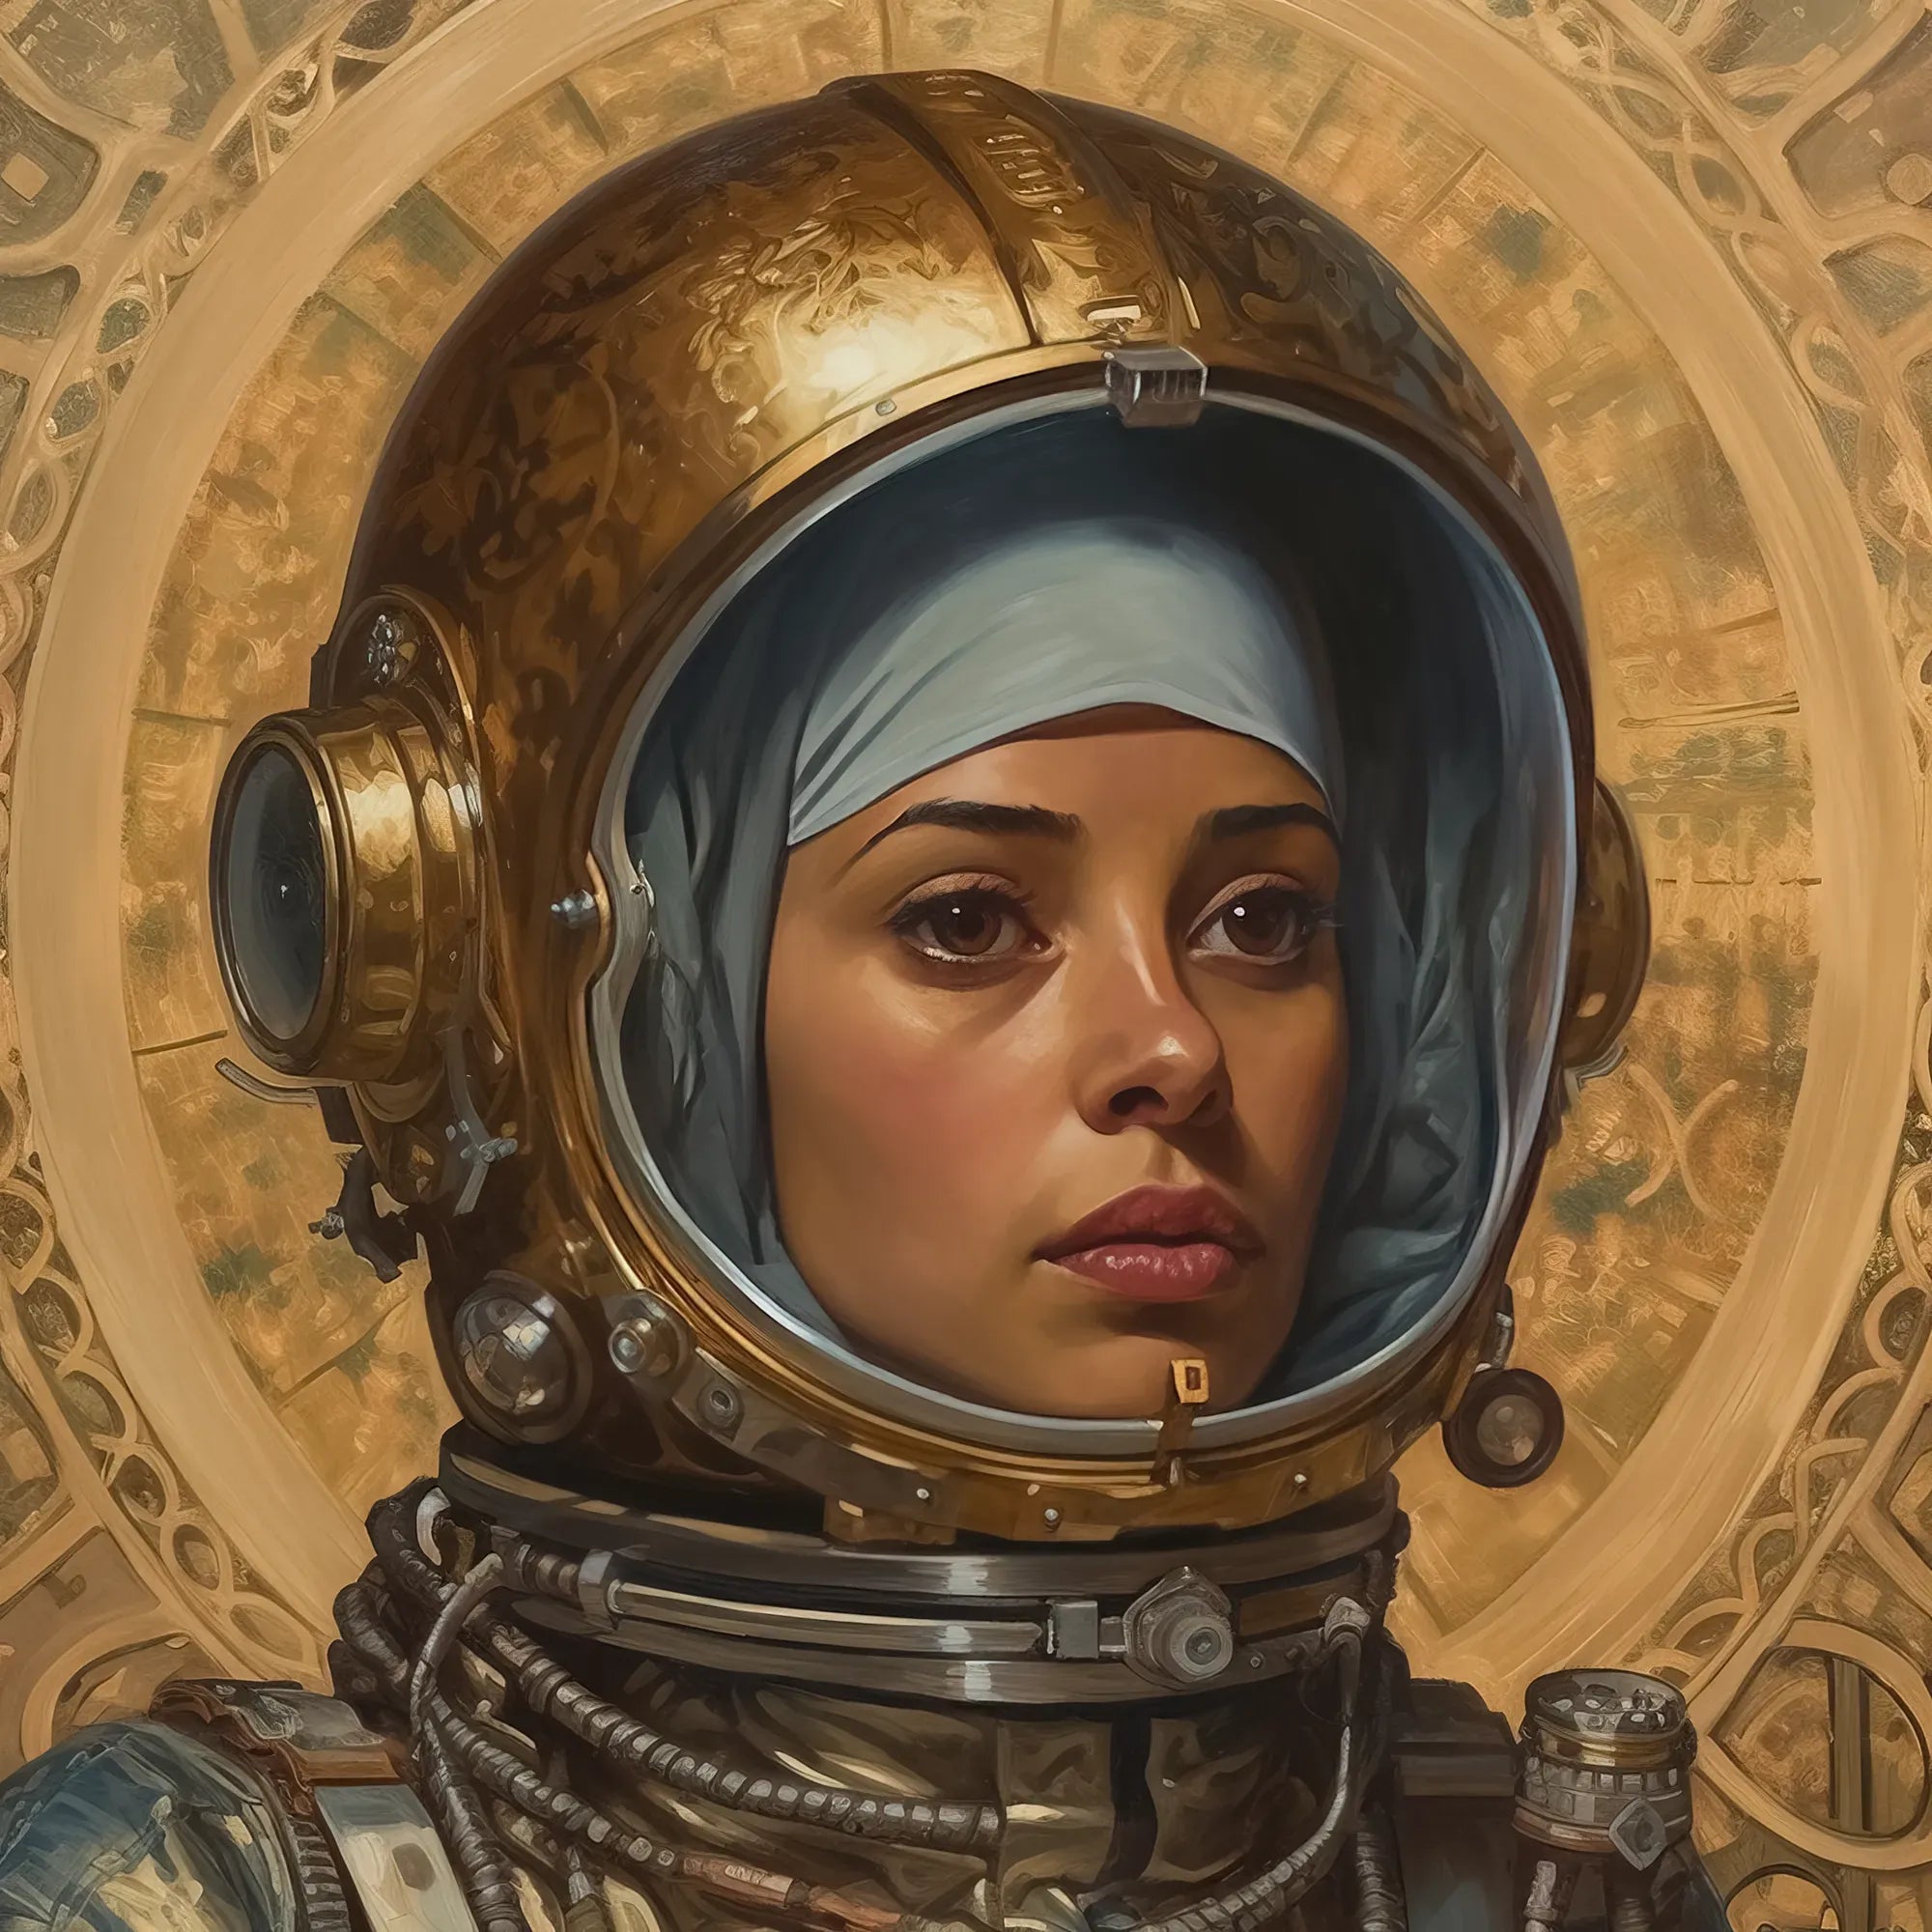 Amira - Lesbian Muslim Astronaut Aesthetic Art Print - Posters Prints & Visual Artwork - Aesthetic Art